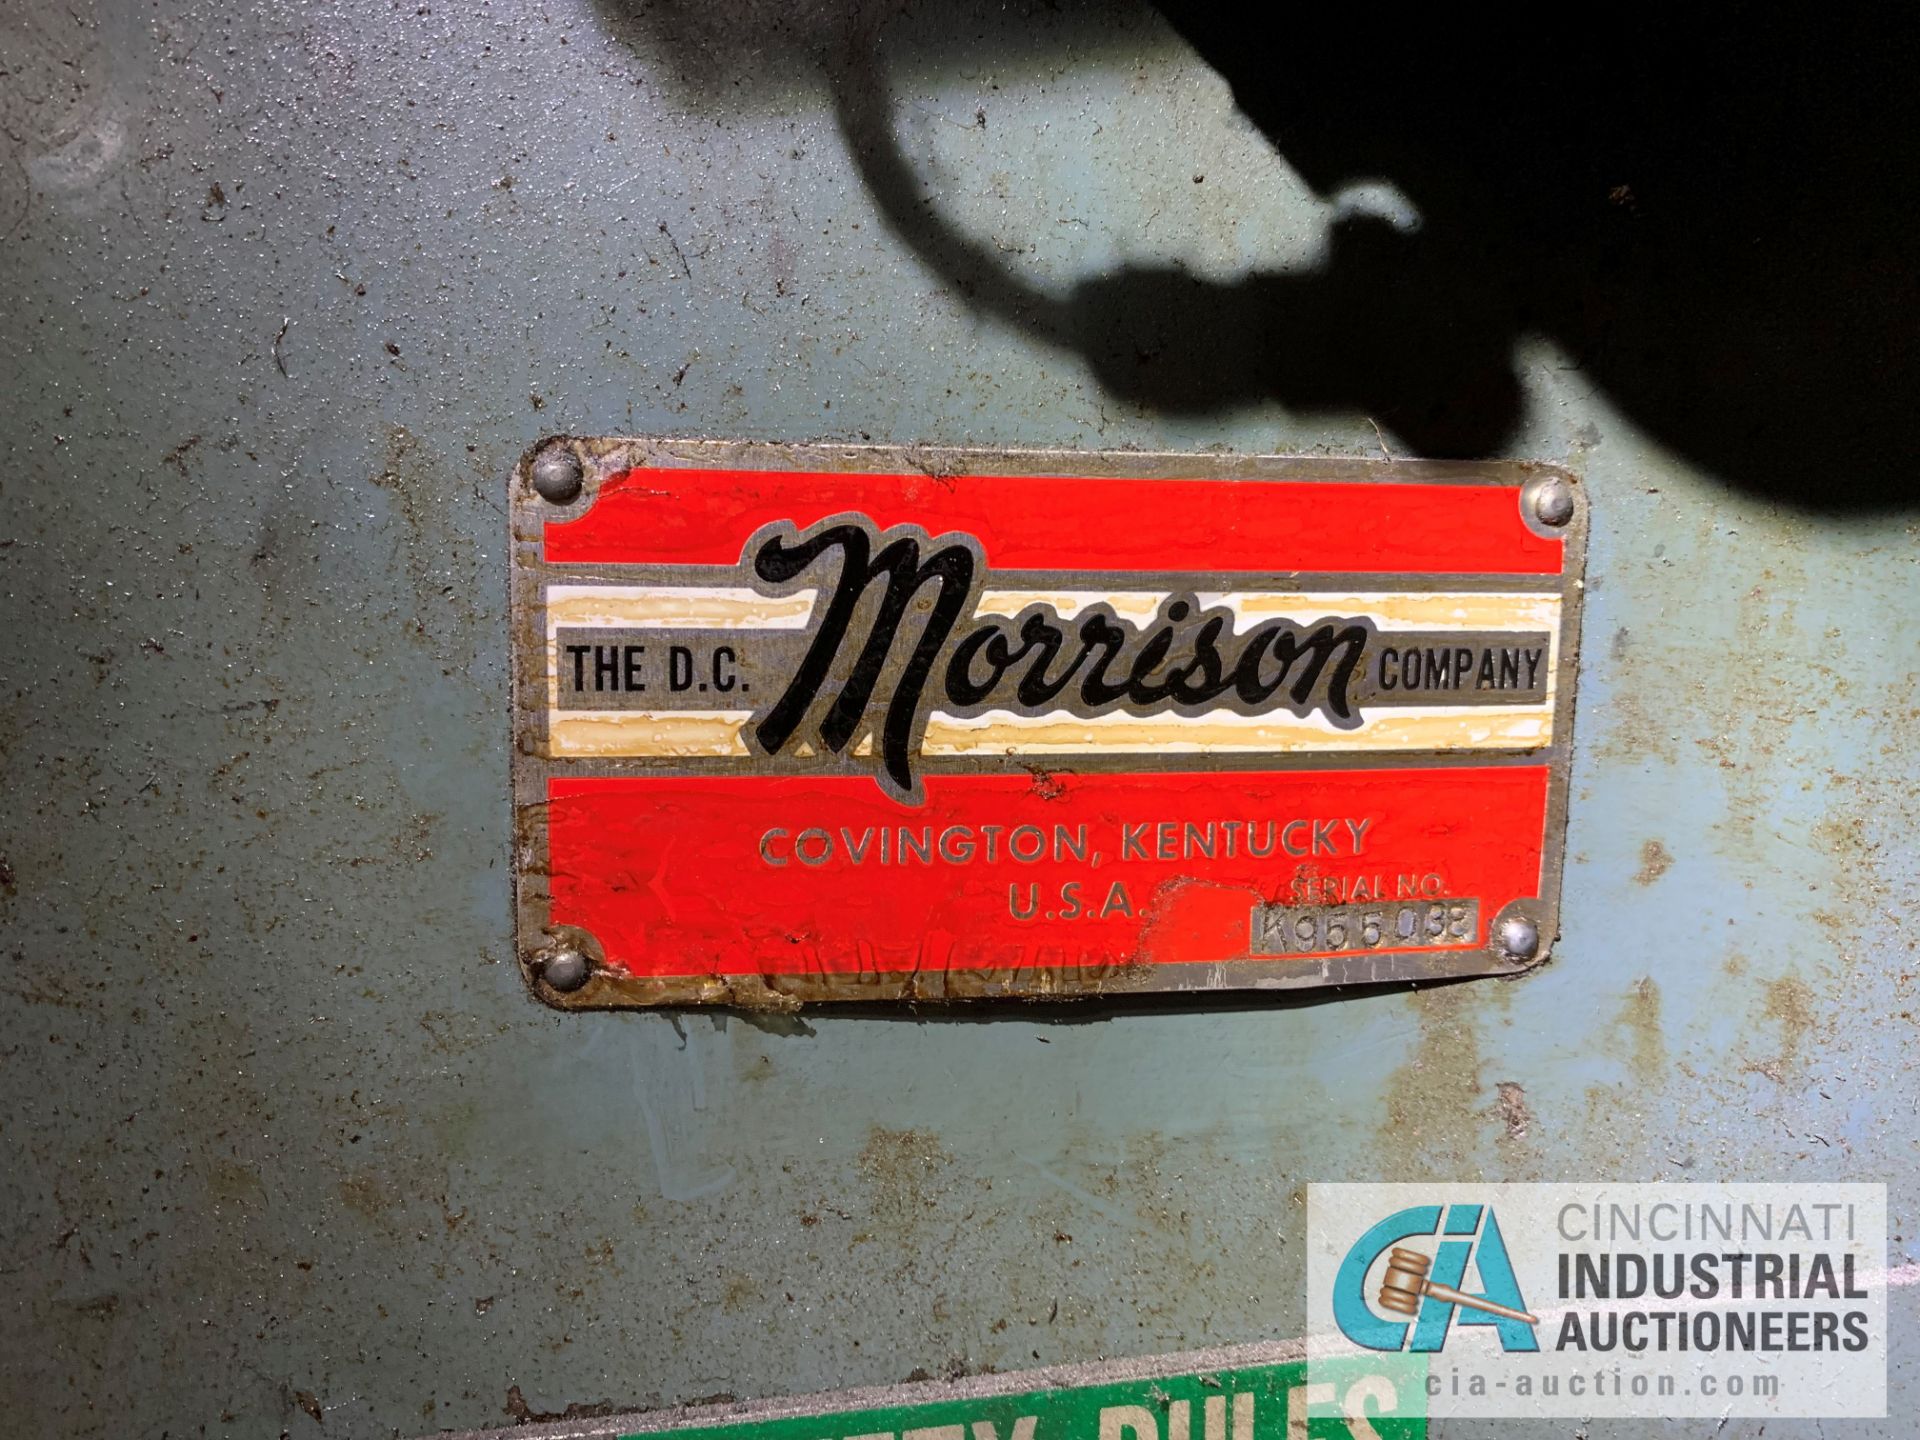 DC Morrison Key Seater - Image 3 of 4